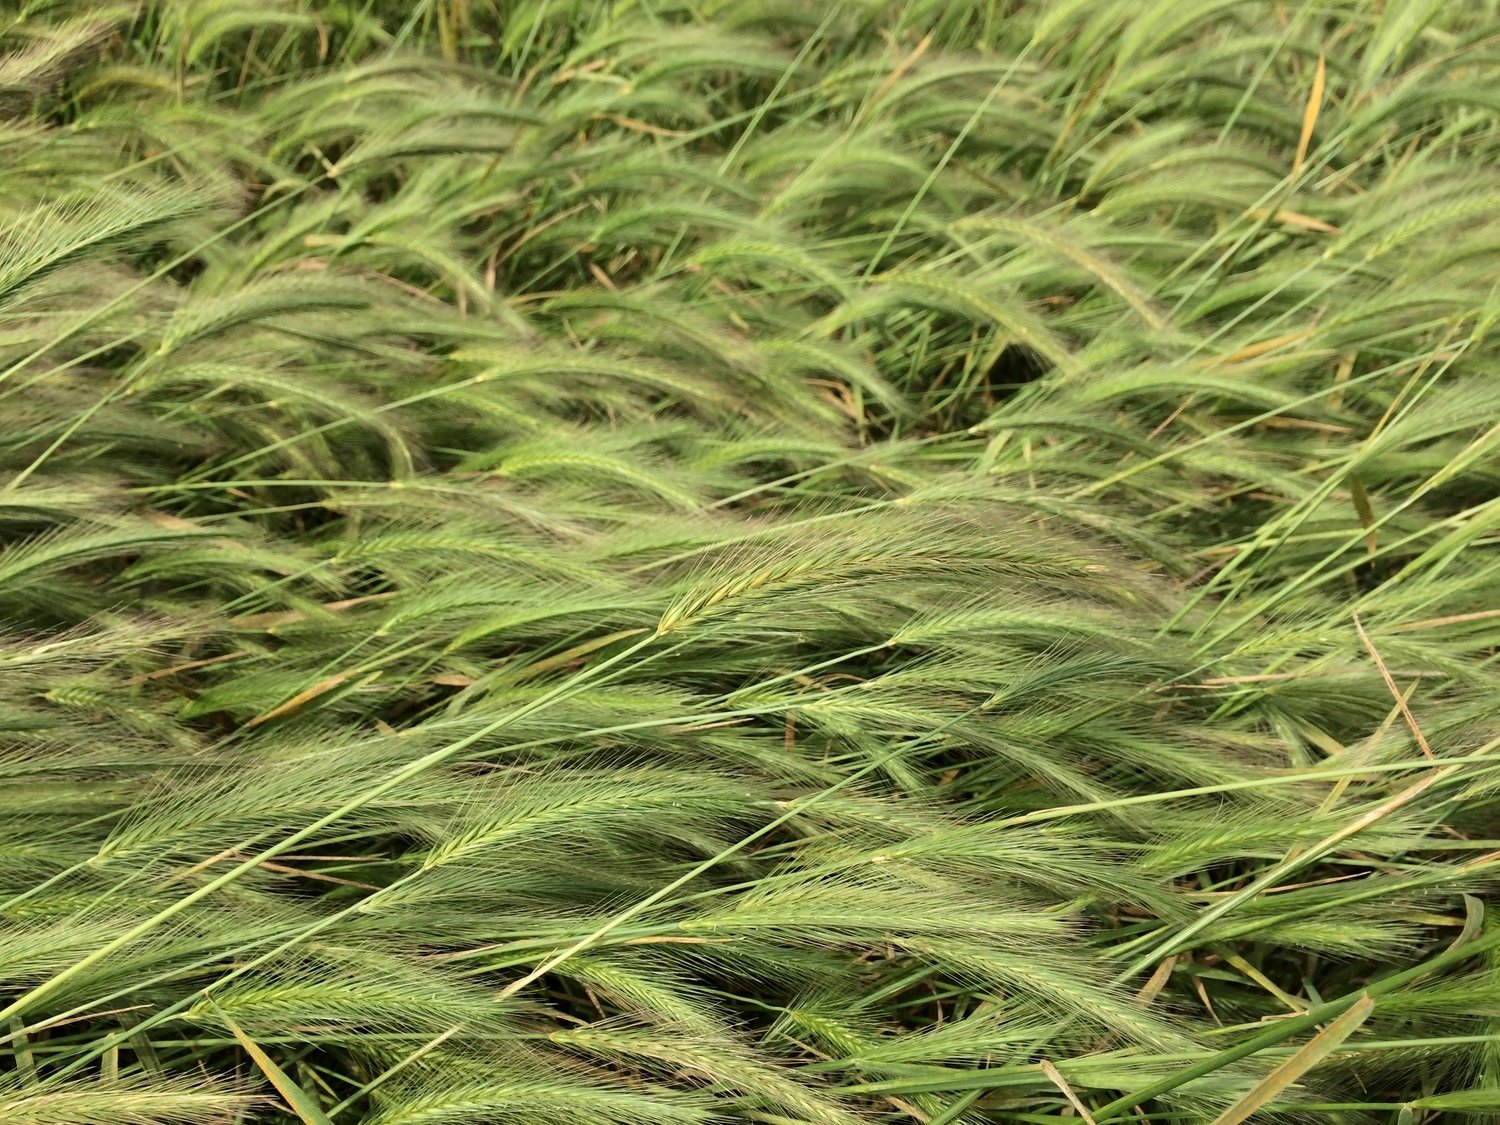 Hordeum depressum, alkali barley